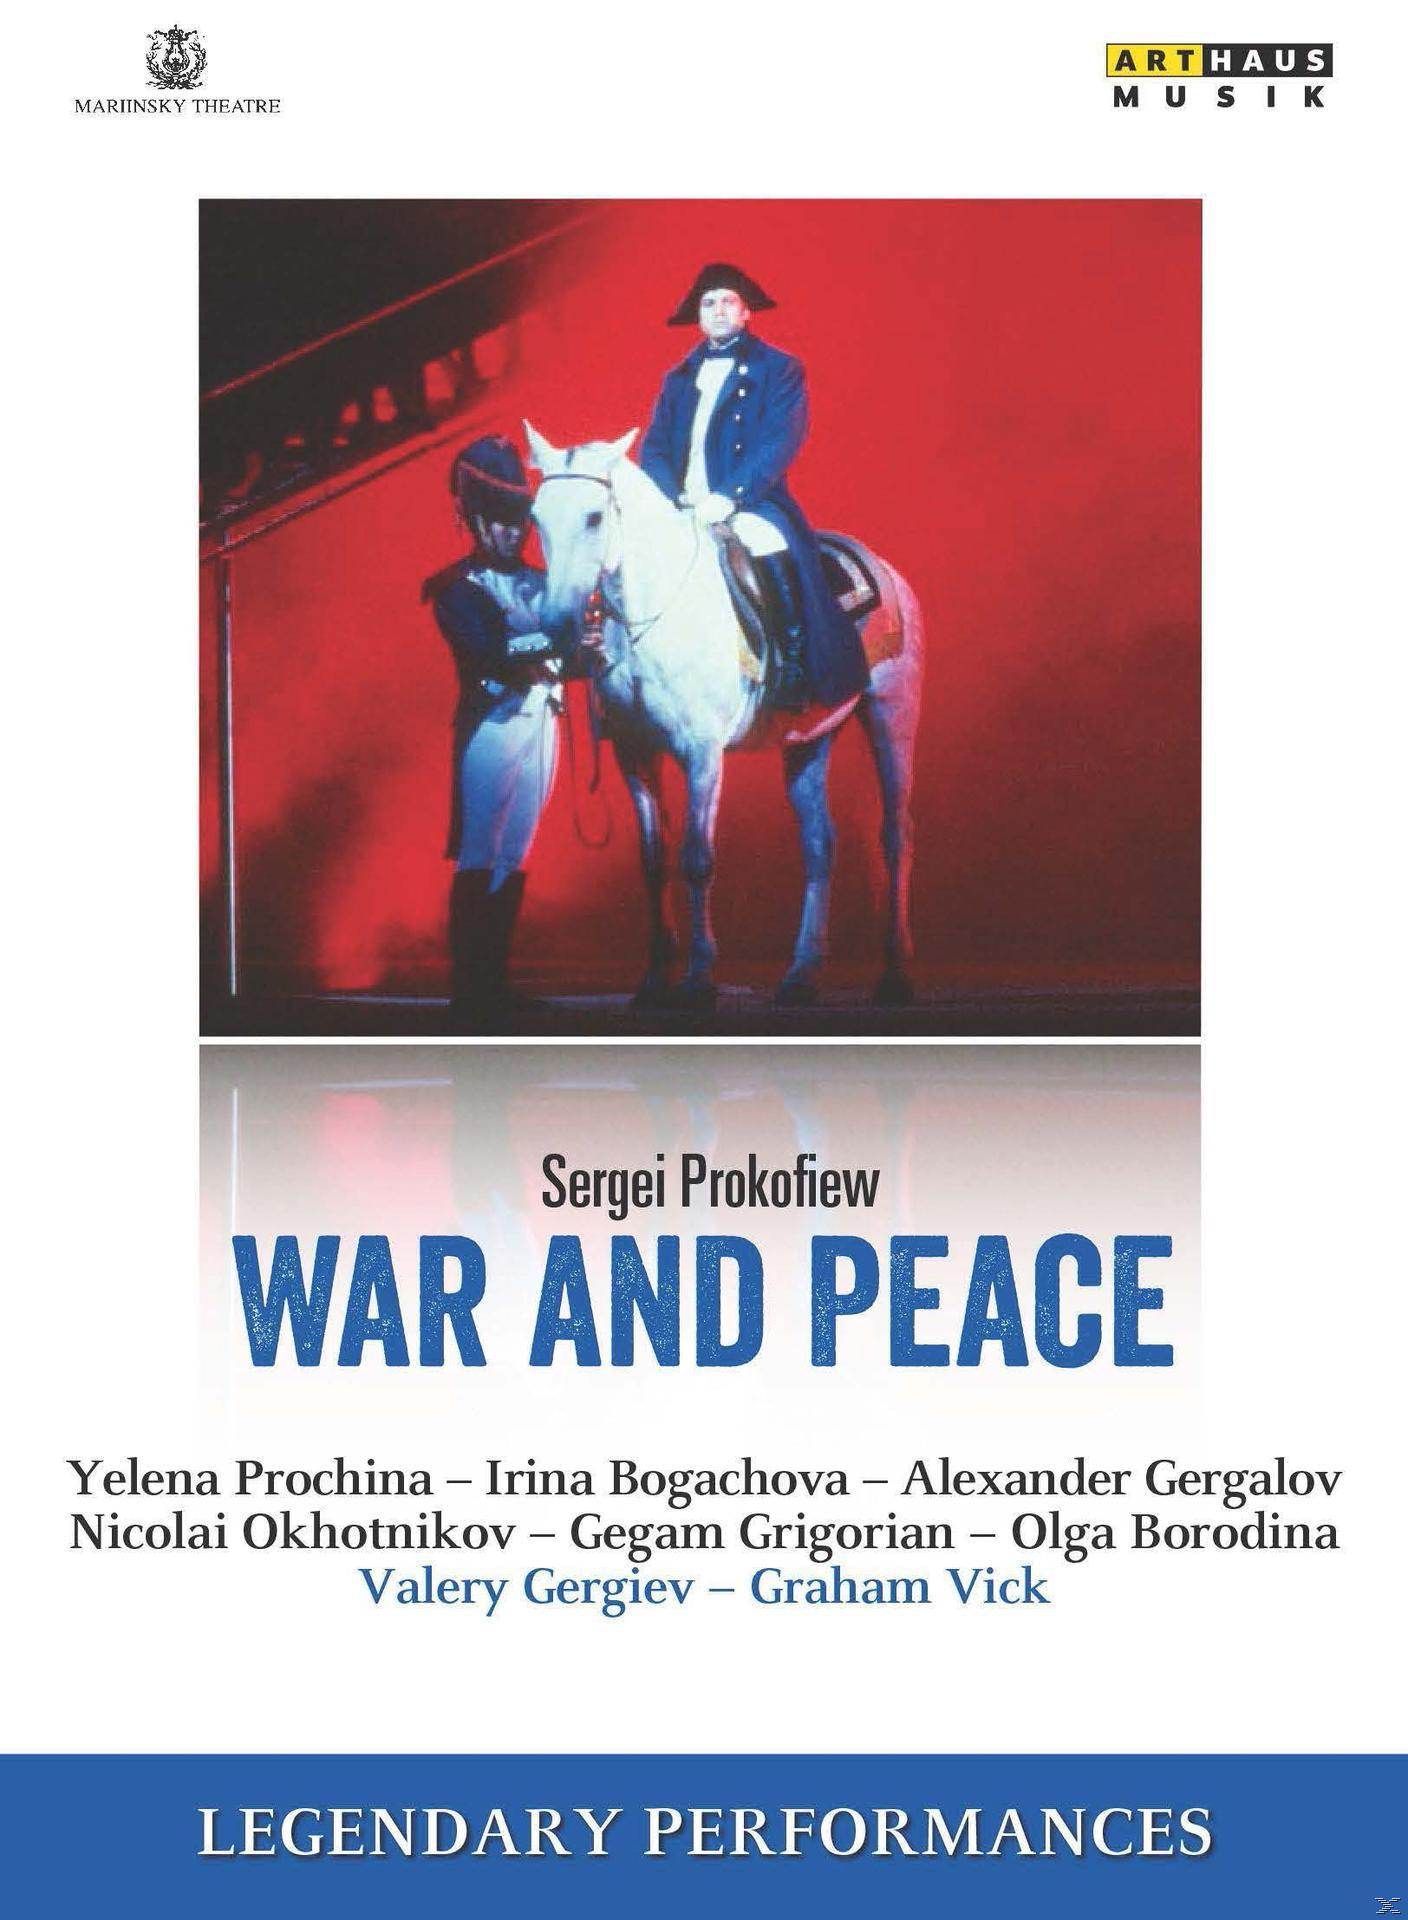 (DVD) Orchestra - Und Gegam Borodina, Elena Olga Vassily Grigorian, Gergalov, Alexander Kirov - Gerelo, Krieg Prokina, Frieden